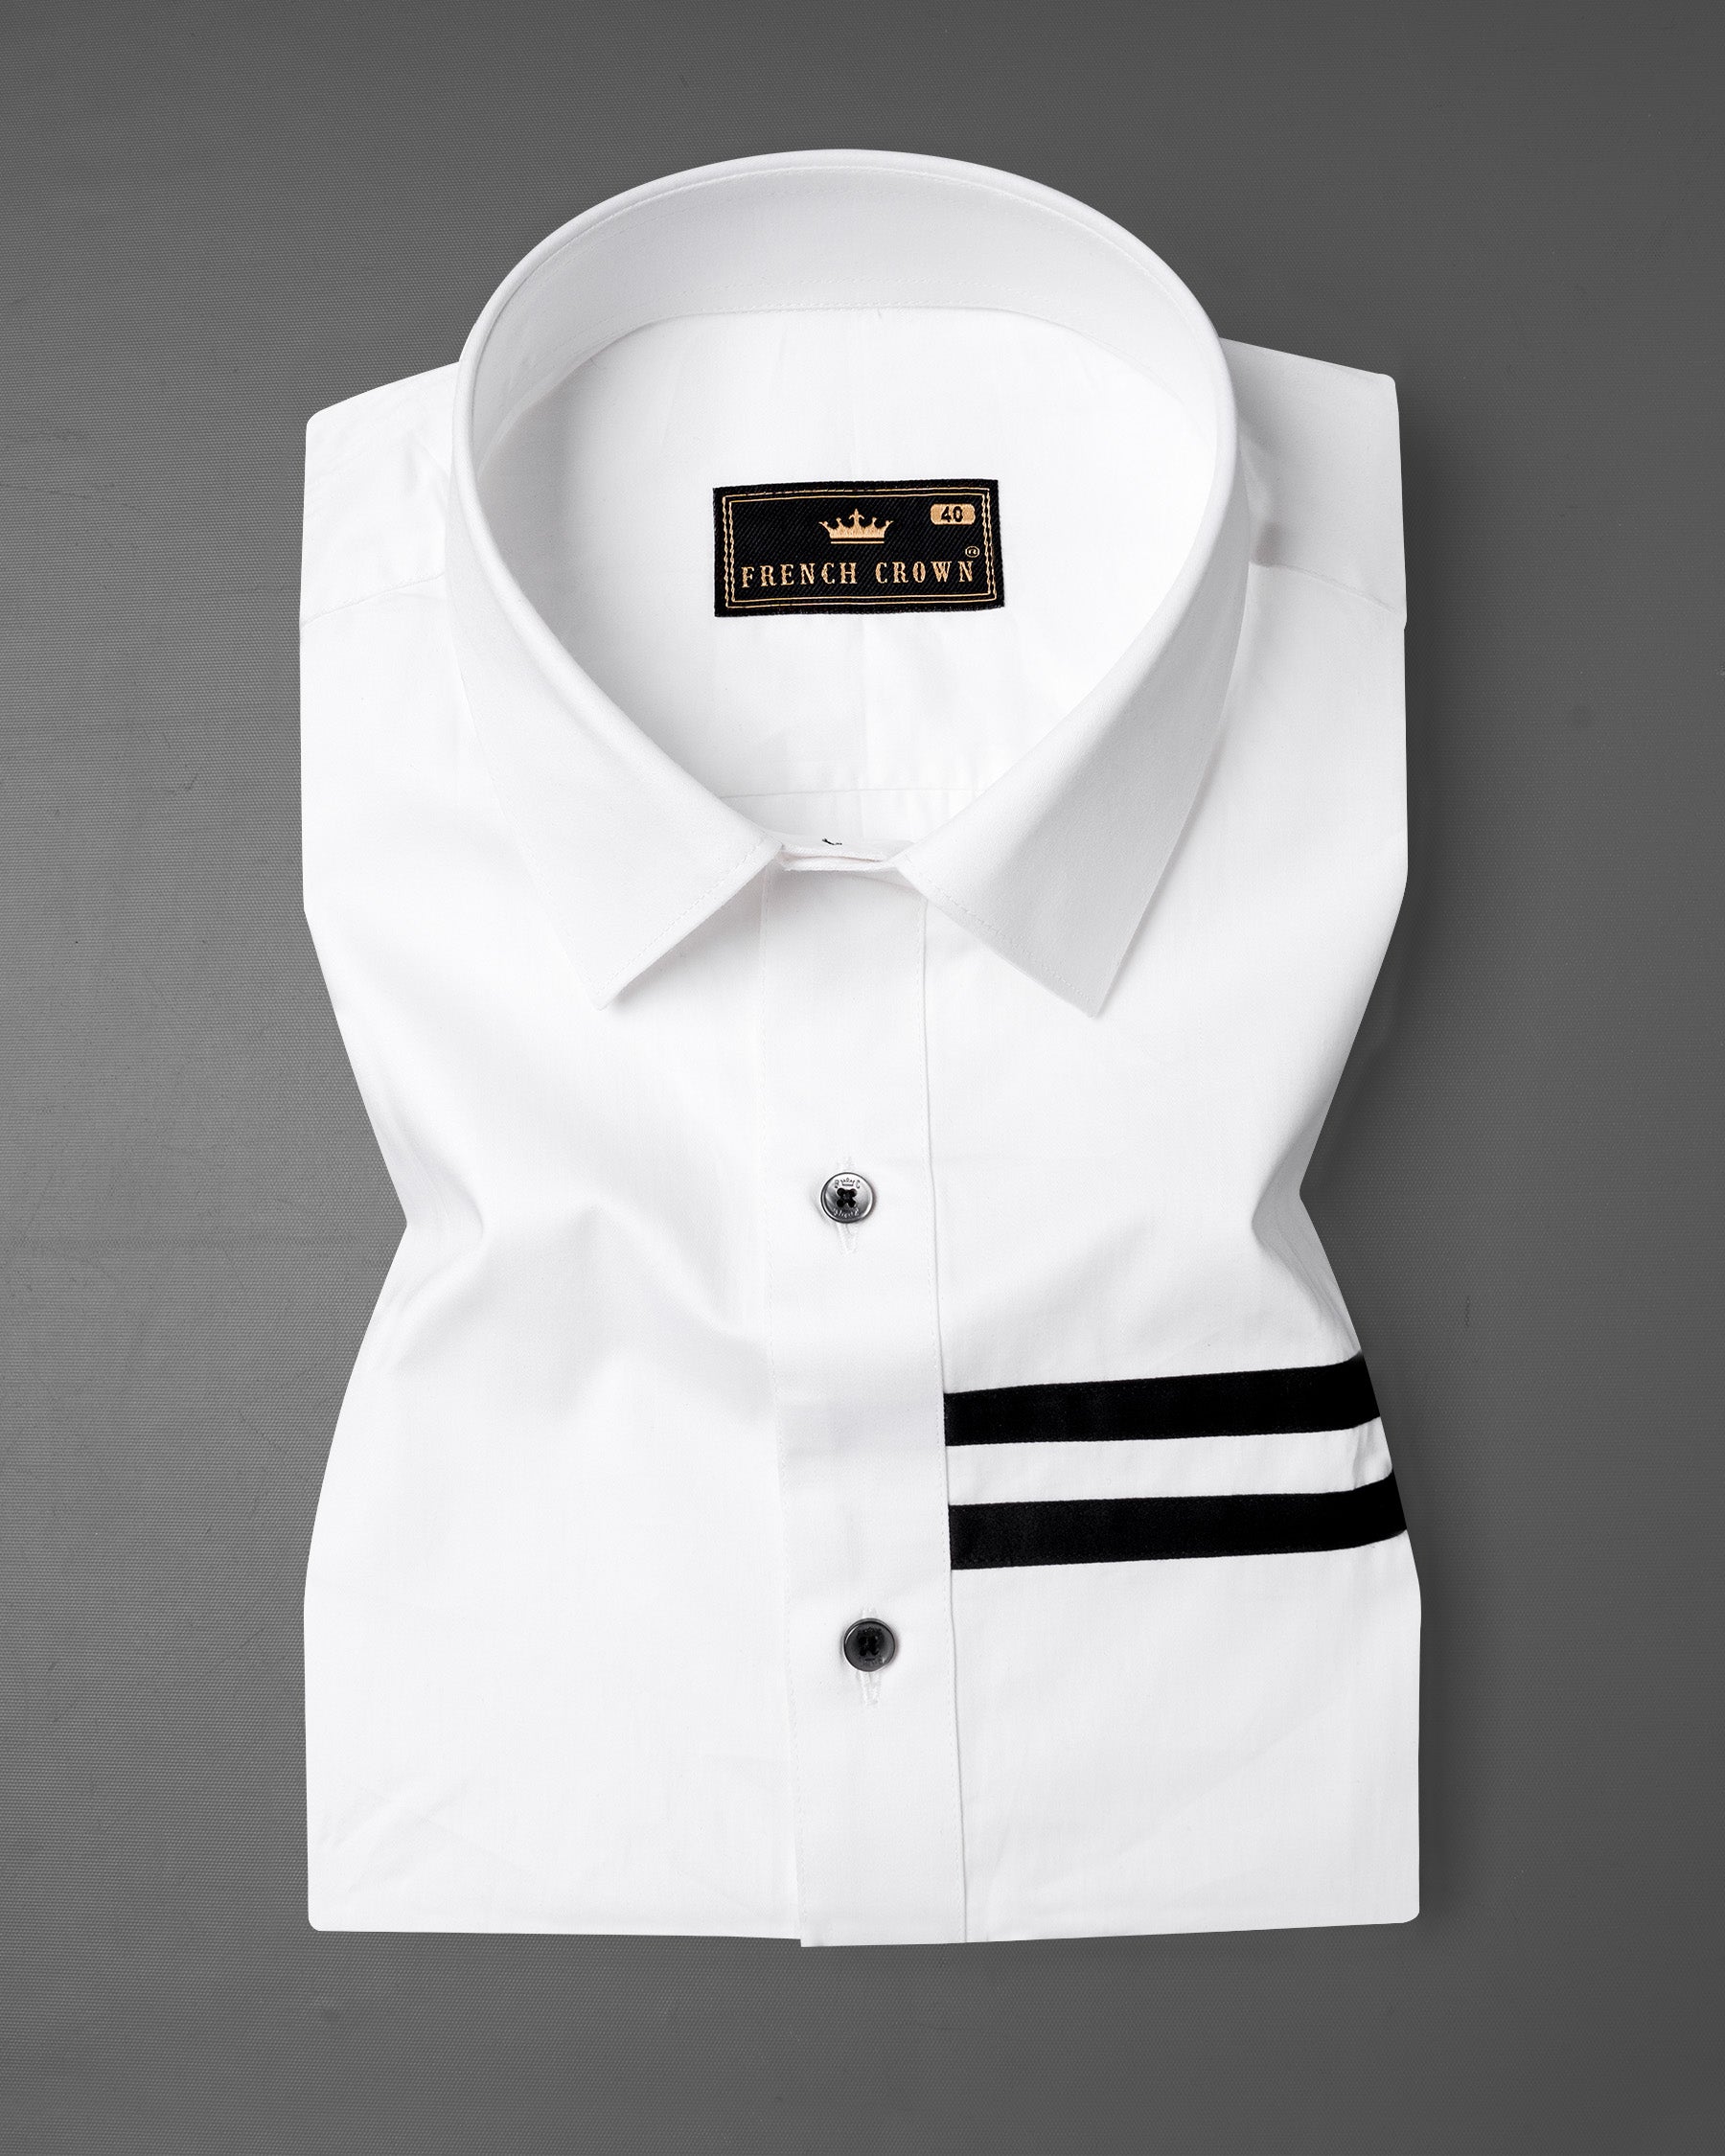 Bright White Subtle Sheen with Black Half Striped Super Soft Premium Cotton Designer Shirt 6824-BLK-P306-SS-38, 6824-BLK-P306-SS-39, 6824-BLK-P306-SS-40, 6824-BLK-P306-SS-42, 6824-BLK-P306-SS-44, 6824-BLK-P306-SS-46, 6824-BLK-P306-SS-48, 6824-BLK-P306-SS-50, 6824-BLK-P306-SS-52